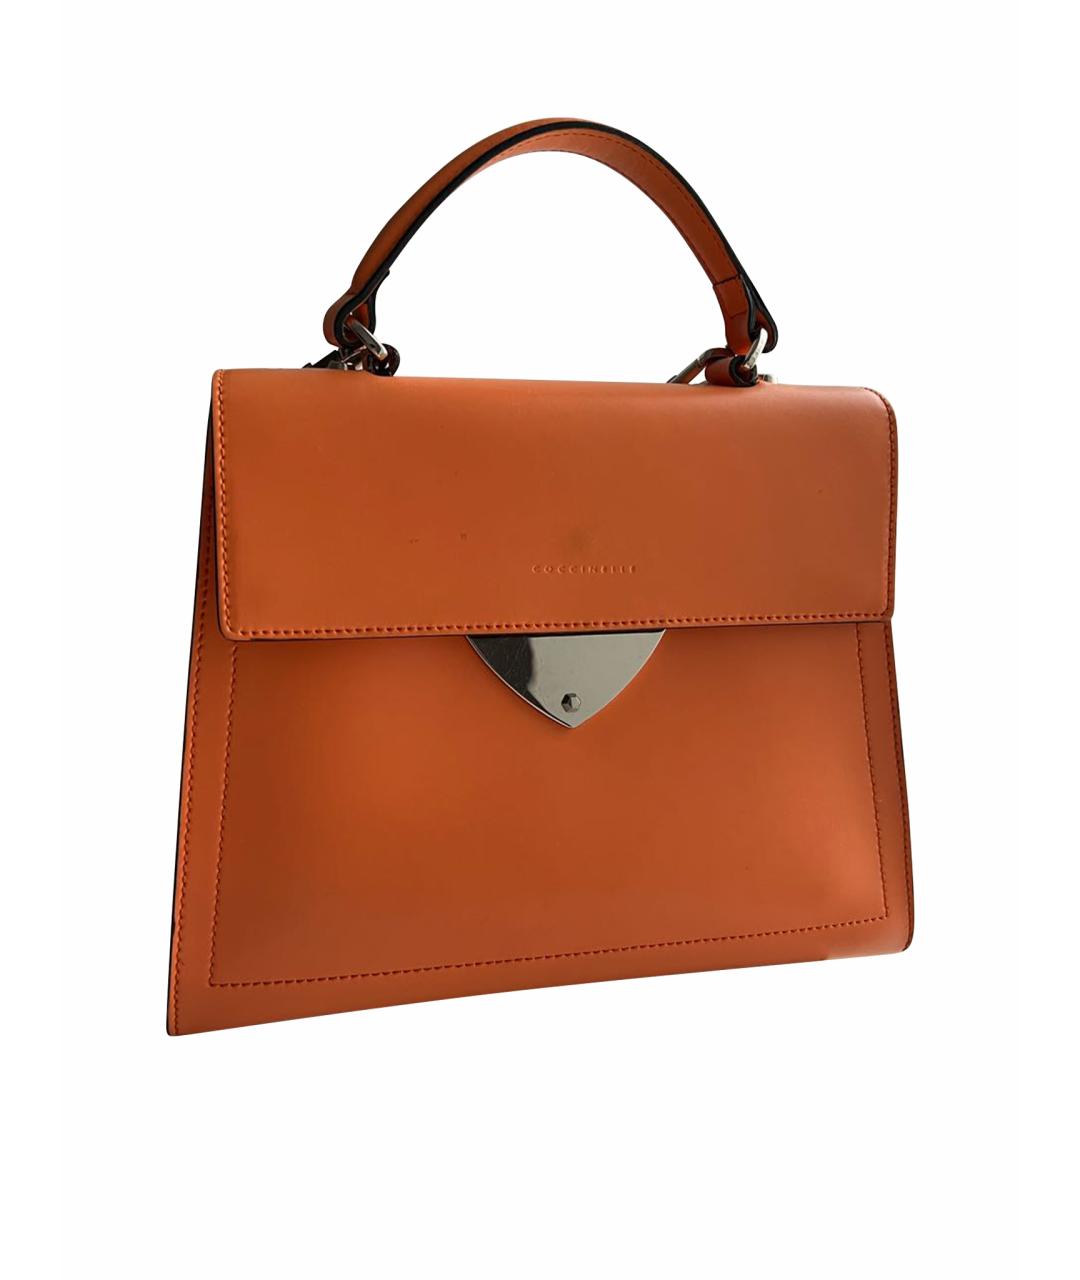 COCCINELLE Оранжевая кожаная сумка с короткими ручками, фото 1